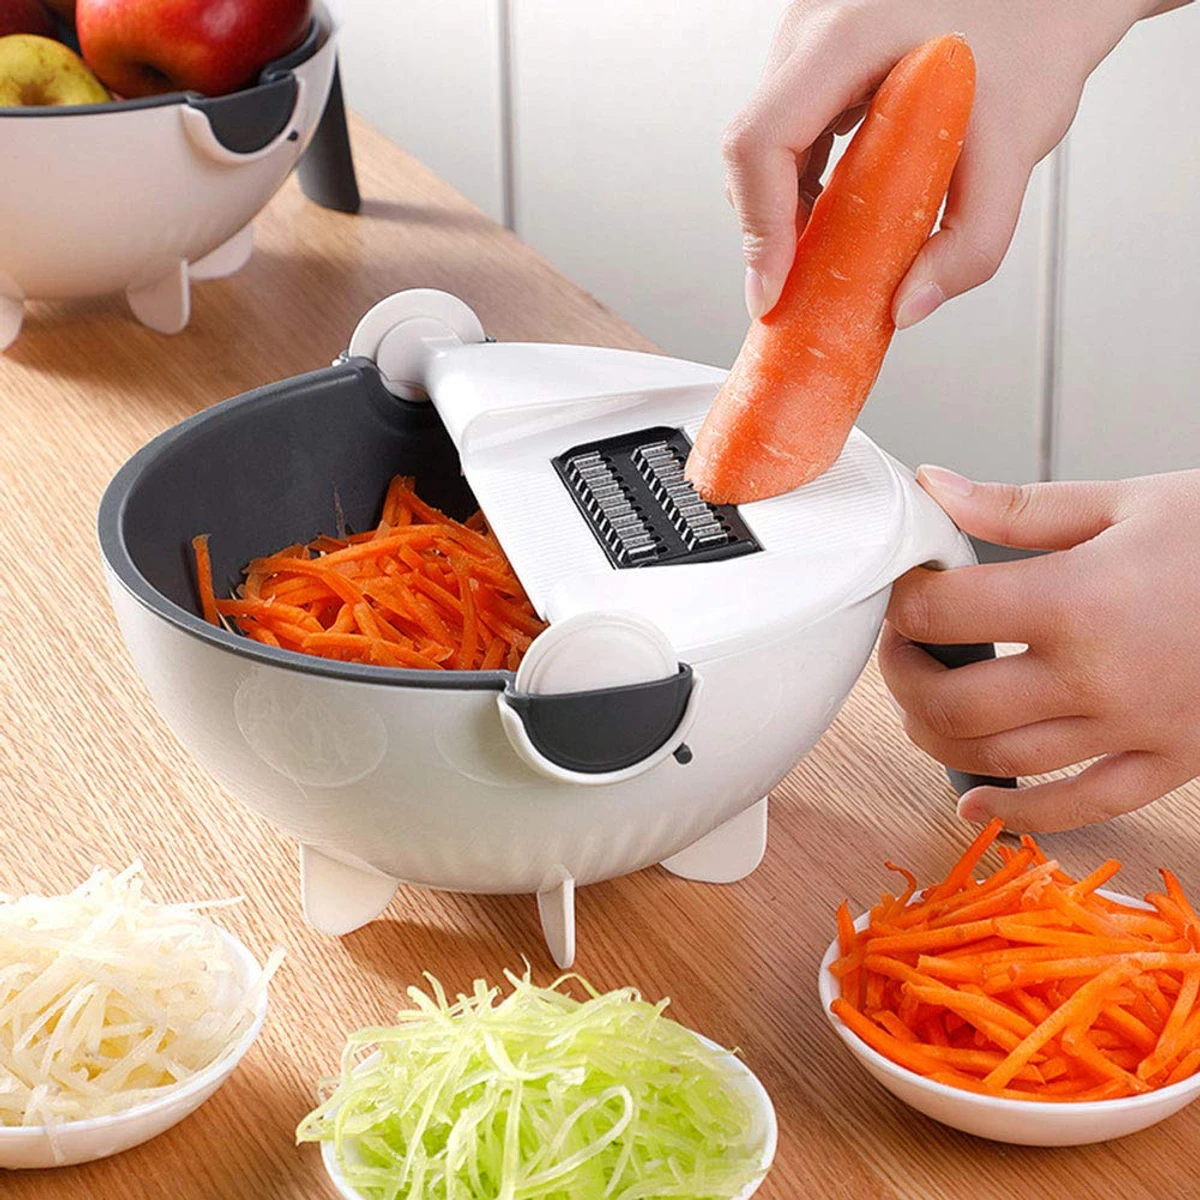 Multifunction Home Vegetable Cutter Grater Slicer for Kitchen Potato Radish Cooking